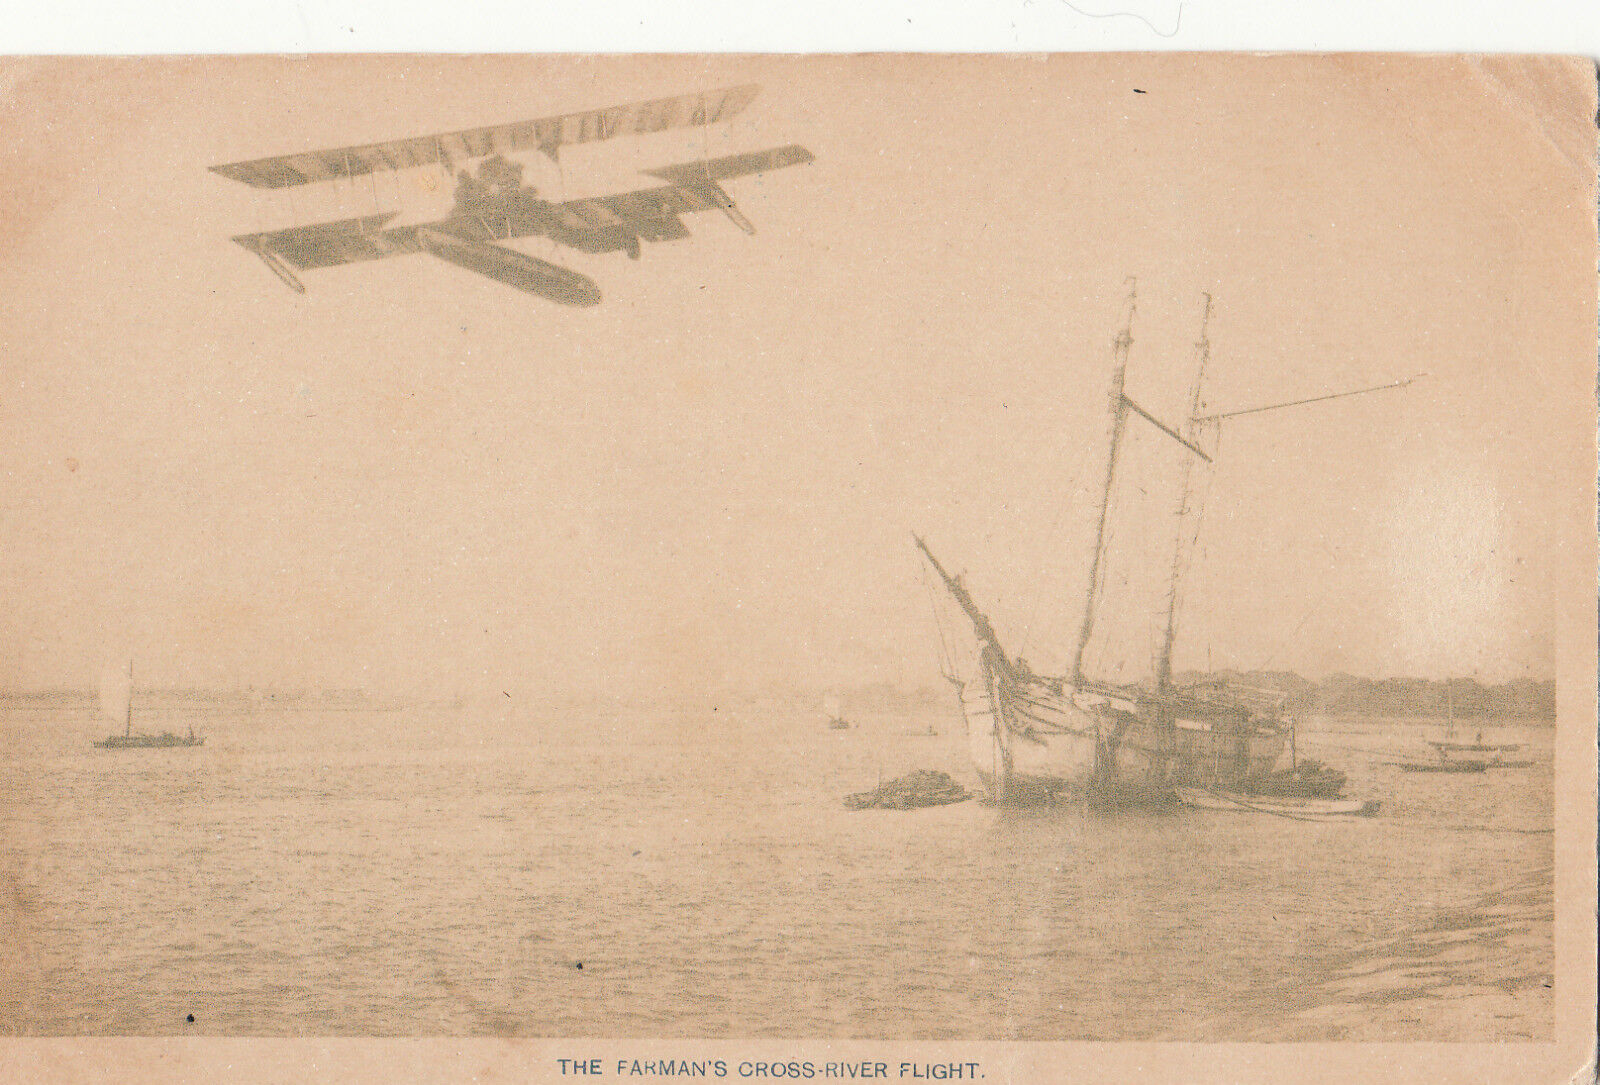 Postcard 1919 Farman\'s Cross River Flight showing bi-plane aeroplane over ship